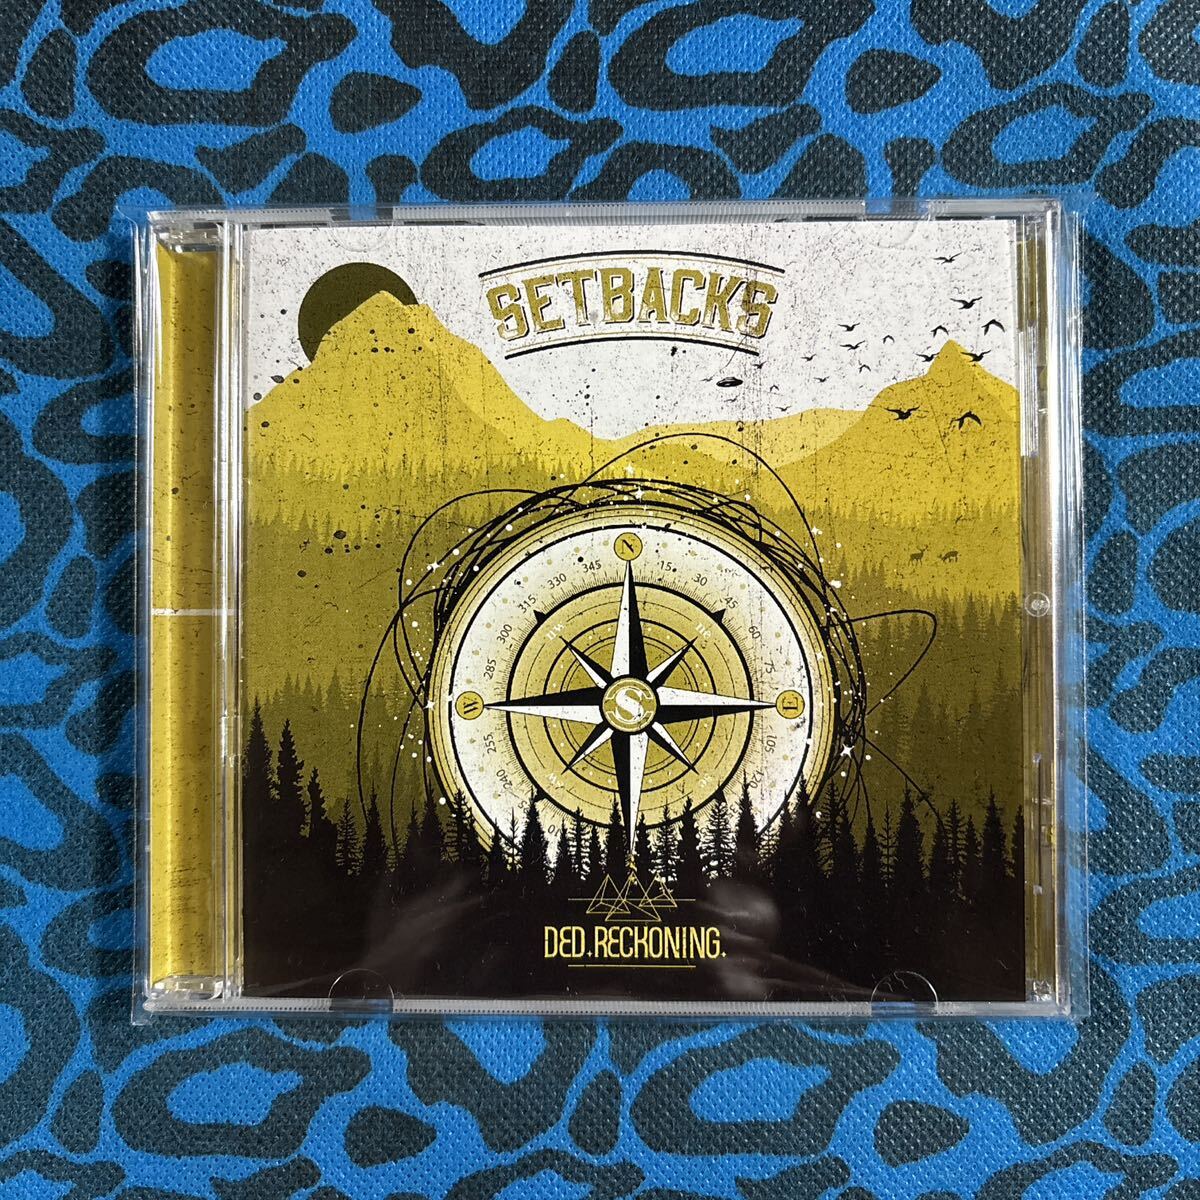 SETBACKS альбом DED RECKONING CD новый товар punk mero Dick punk skate punk твердый core блокировка n roll носорог kobi Lee 